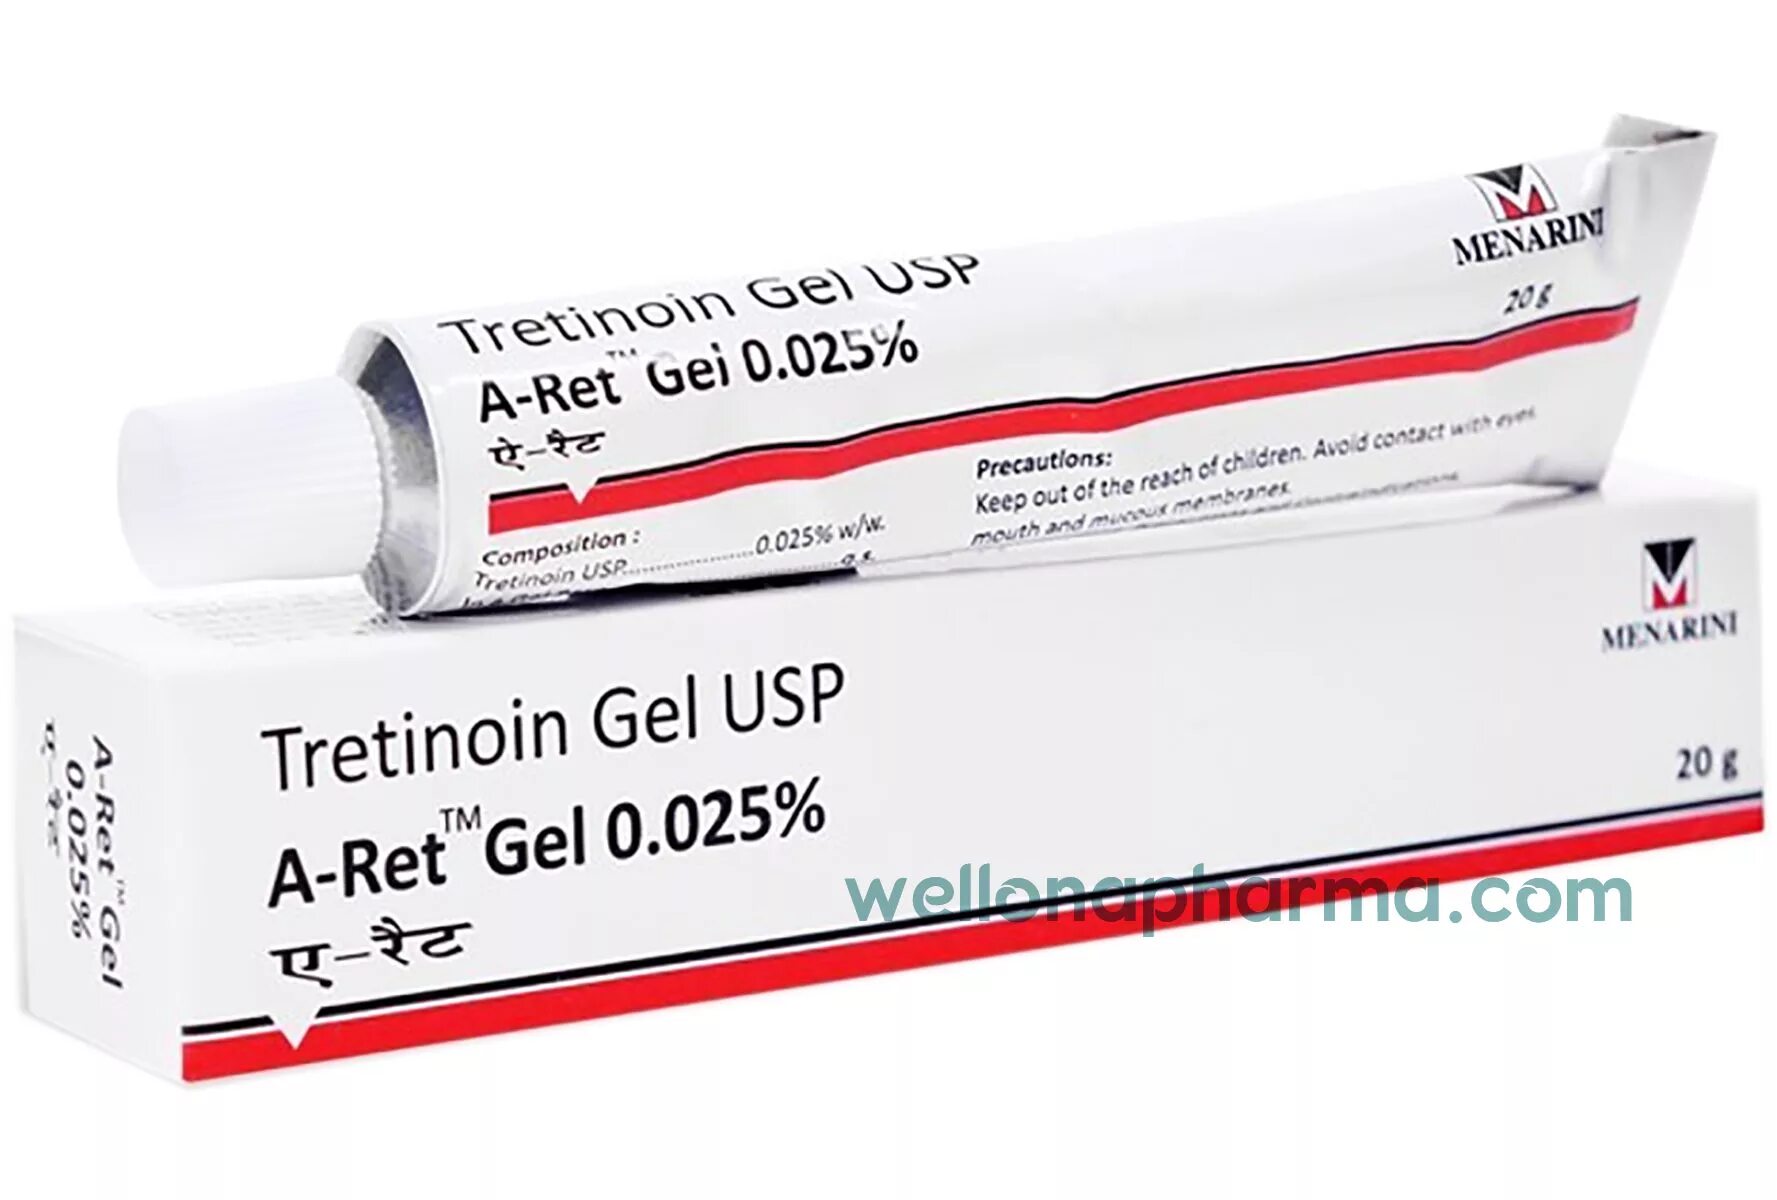 Tretinoin 0.025 гель. Tretinoin Cream 0.025. Tretinoin Gel USP 0.1. Третиноин гель ЮСП А-рет гель 0,1% tretinoin Gel USP A-Ret Gel 0.1% Menarini.